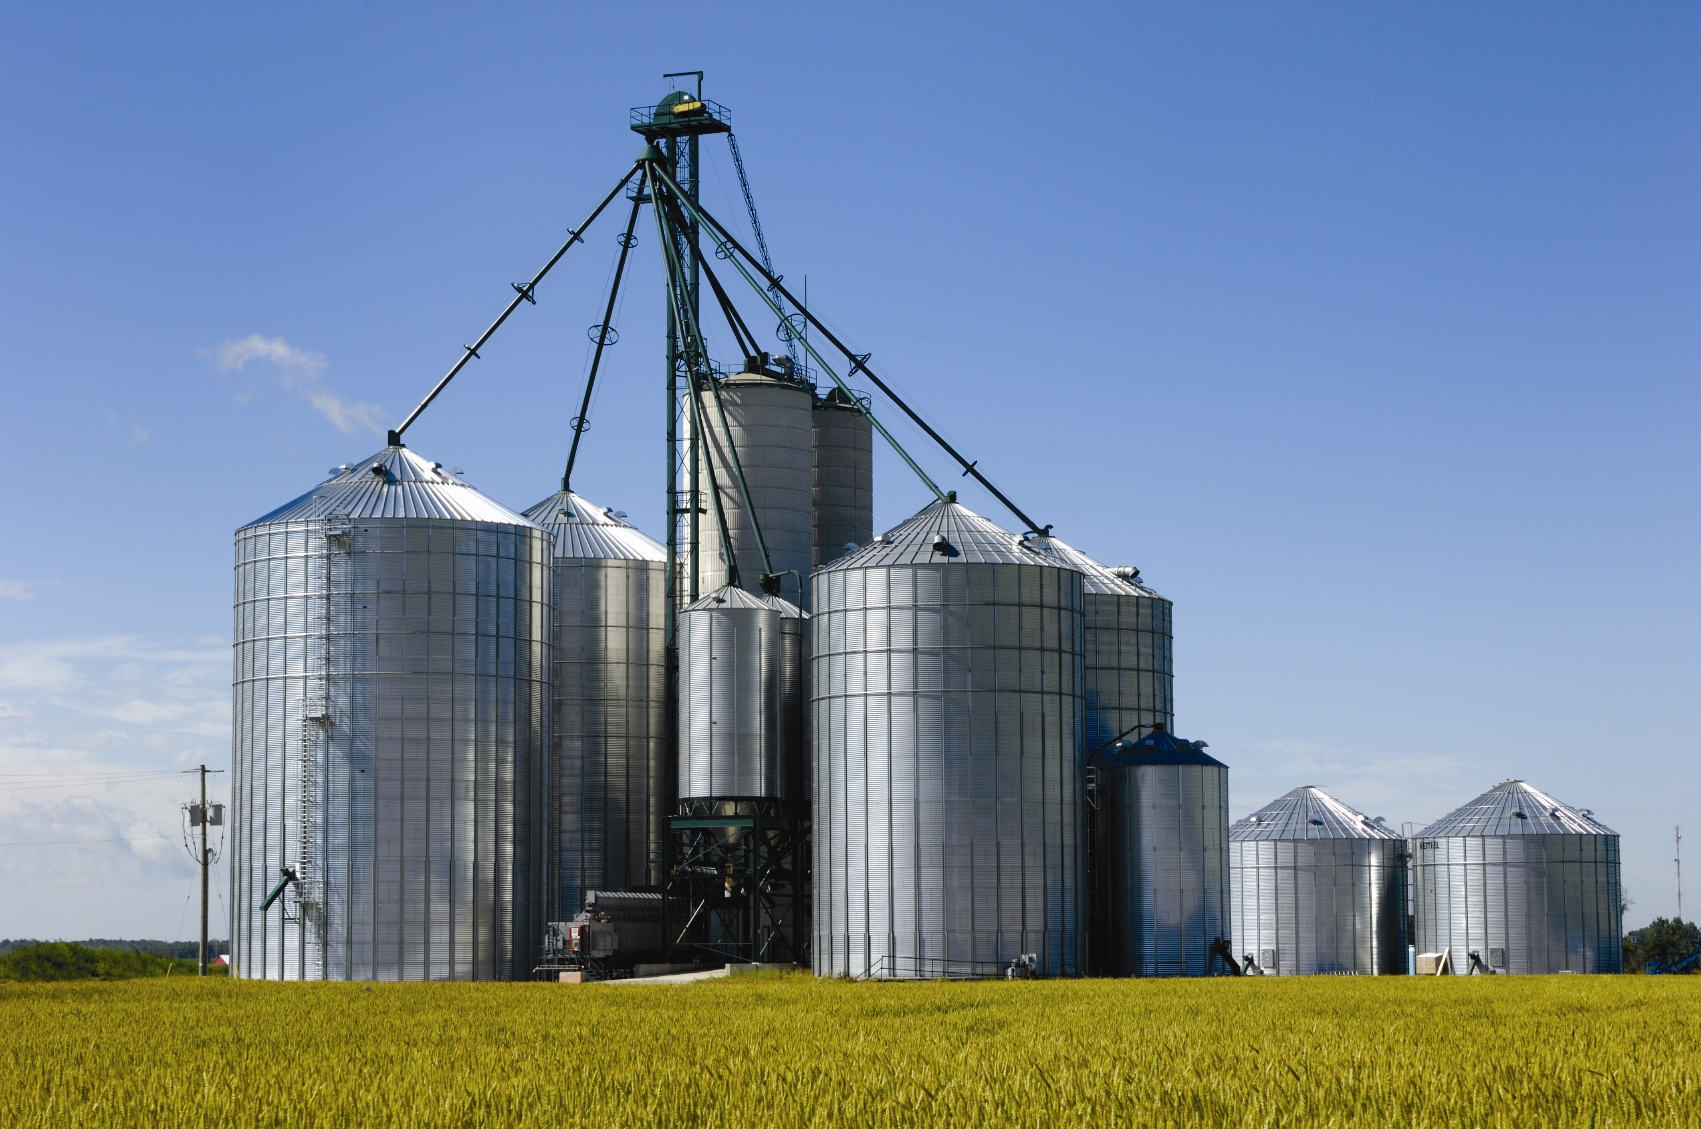 Grain Bin Safety Tips - Grains of Knowledge